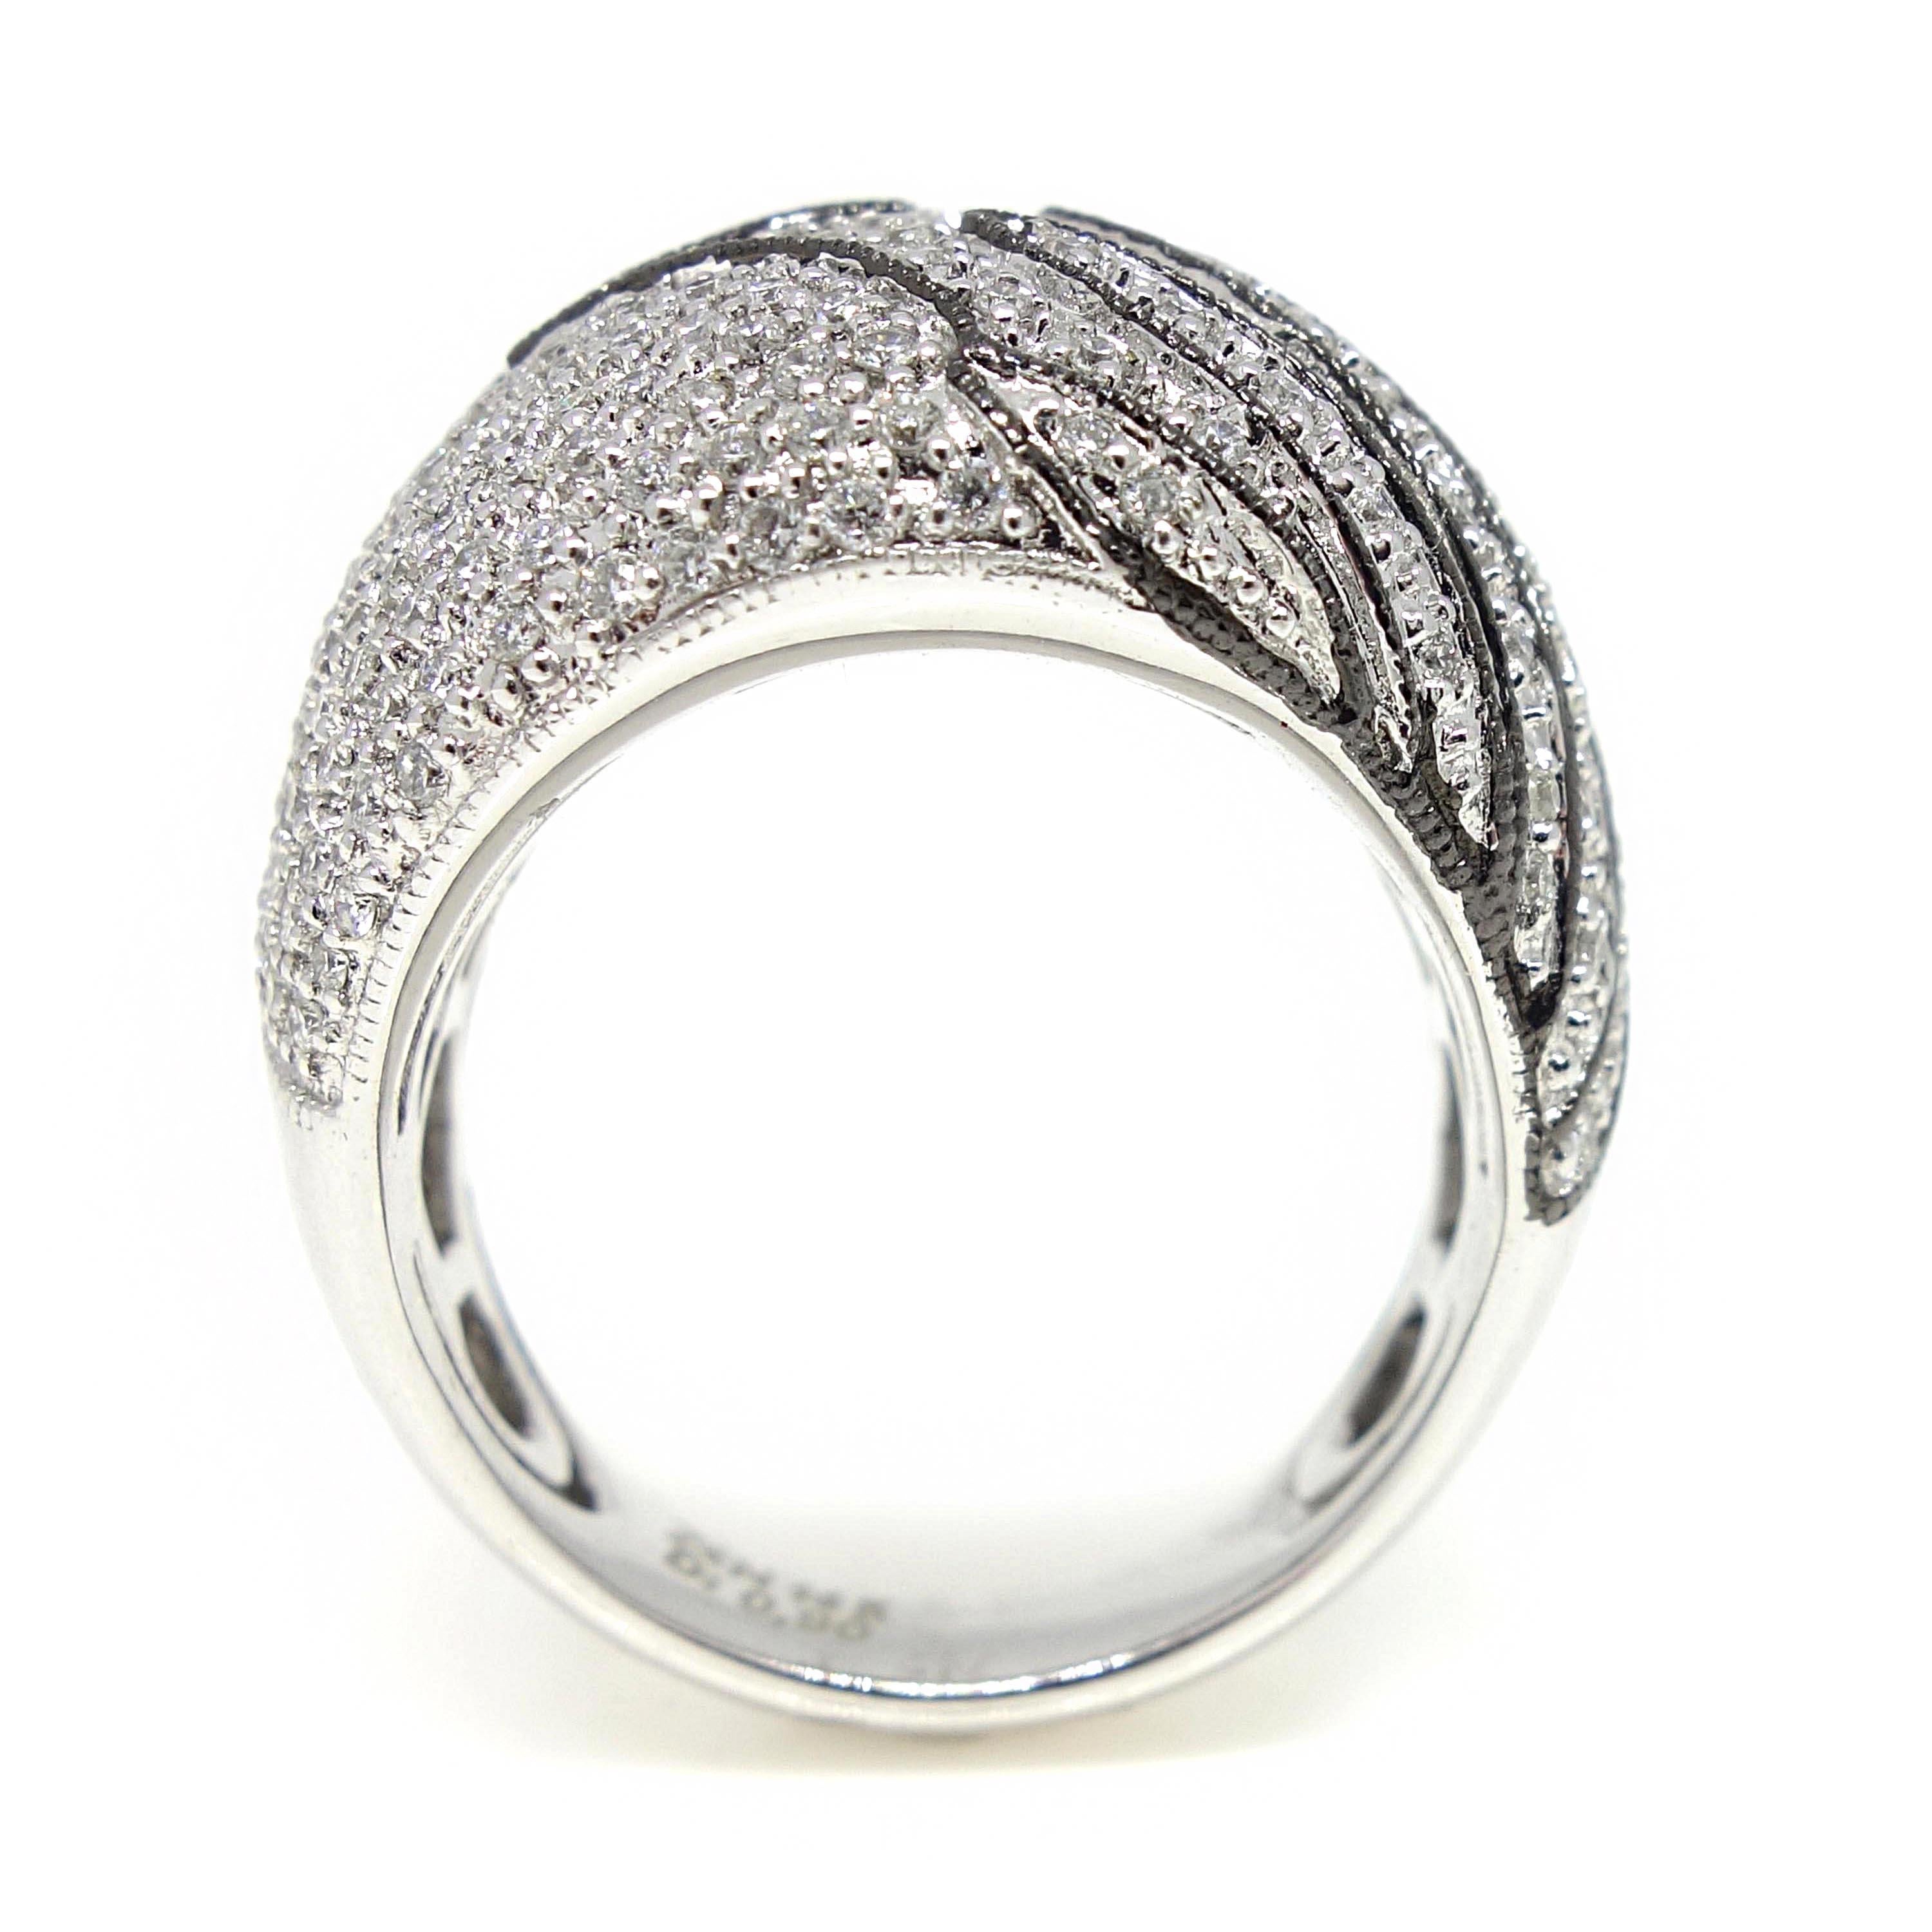 Women's 214 Round Brilliant Cut Diamond Ring in 14k White Gold For Sale